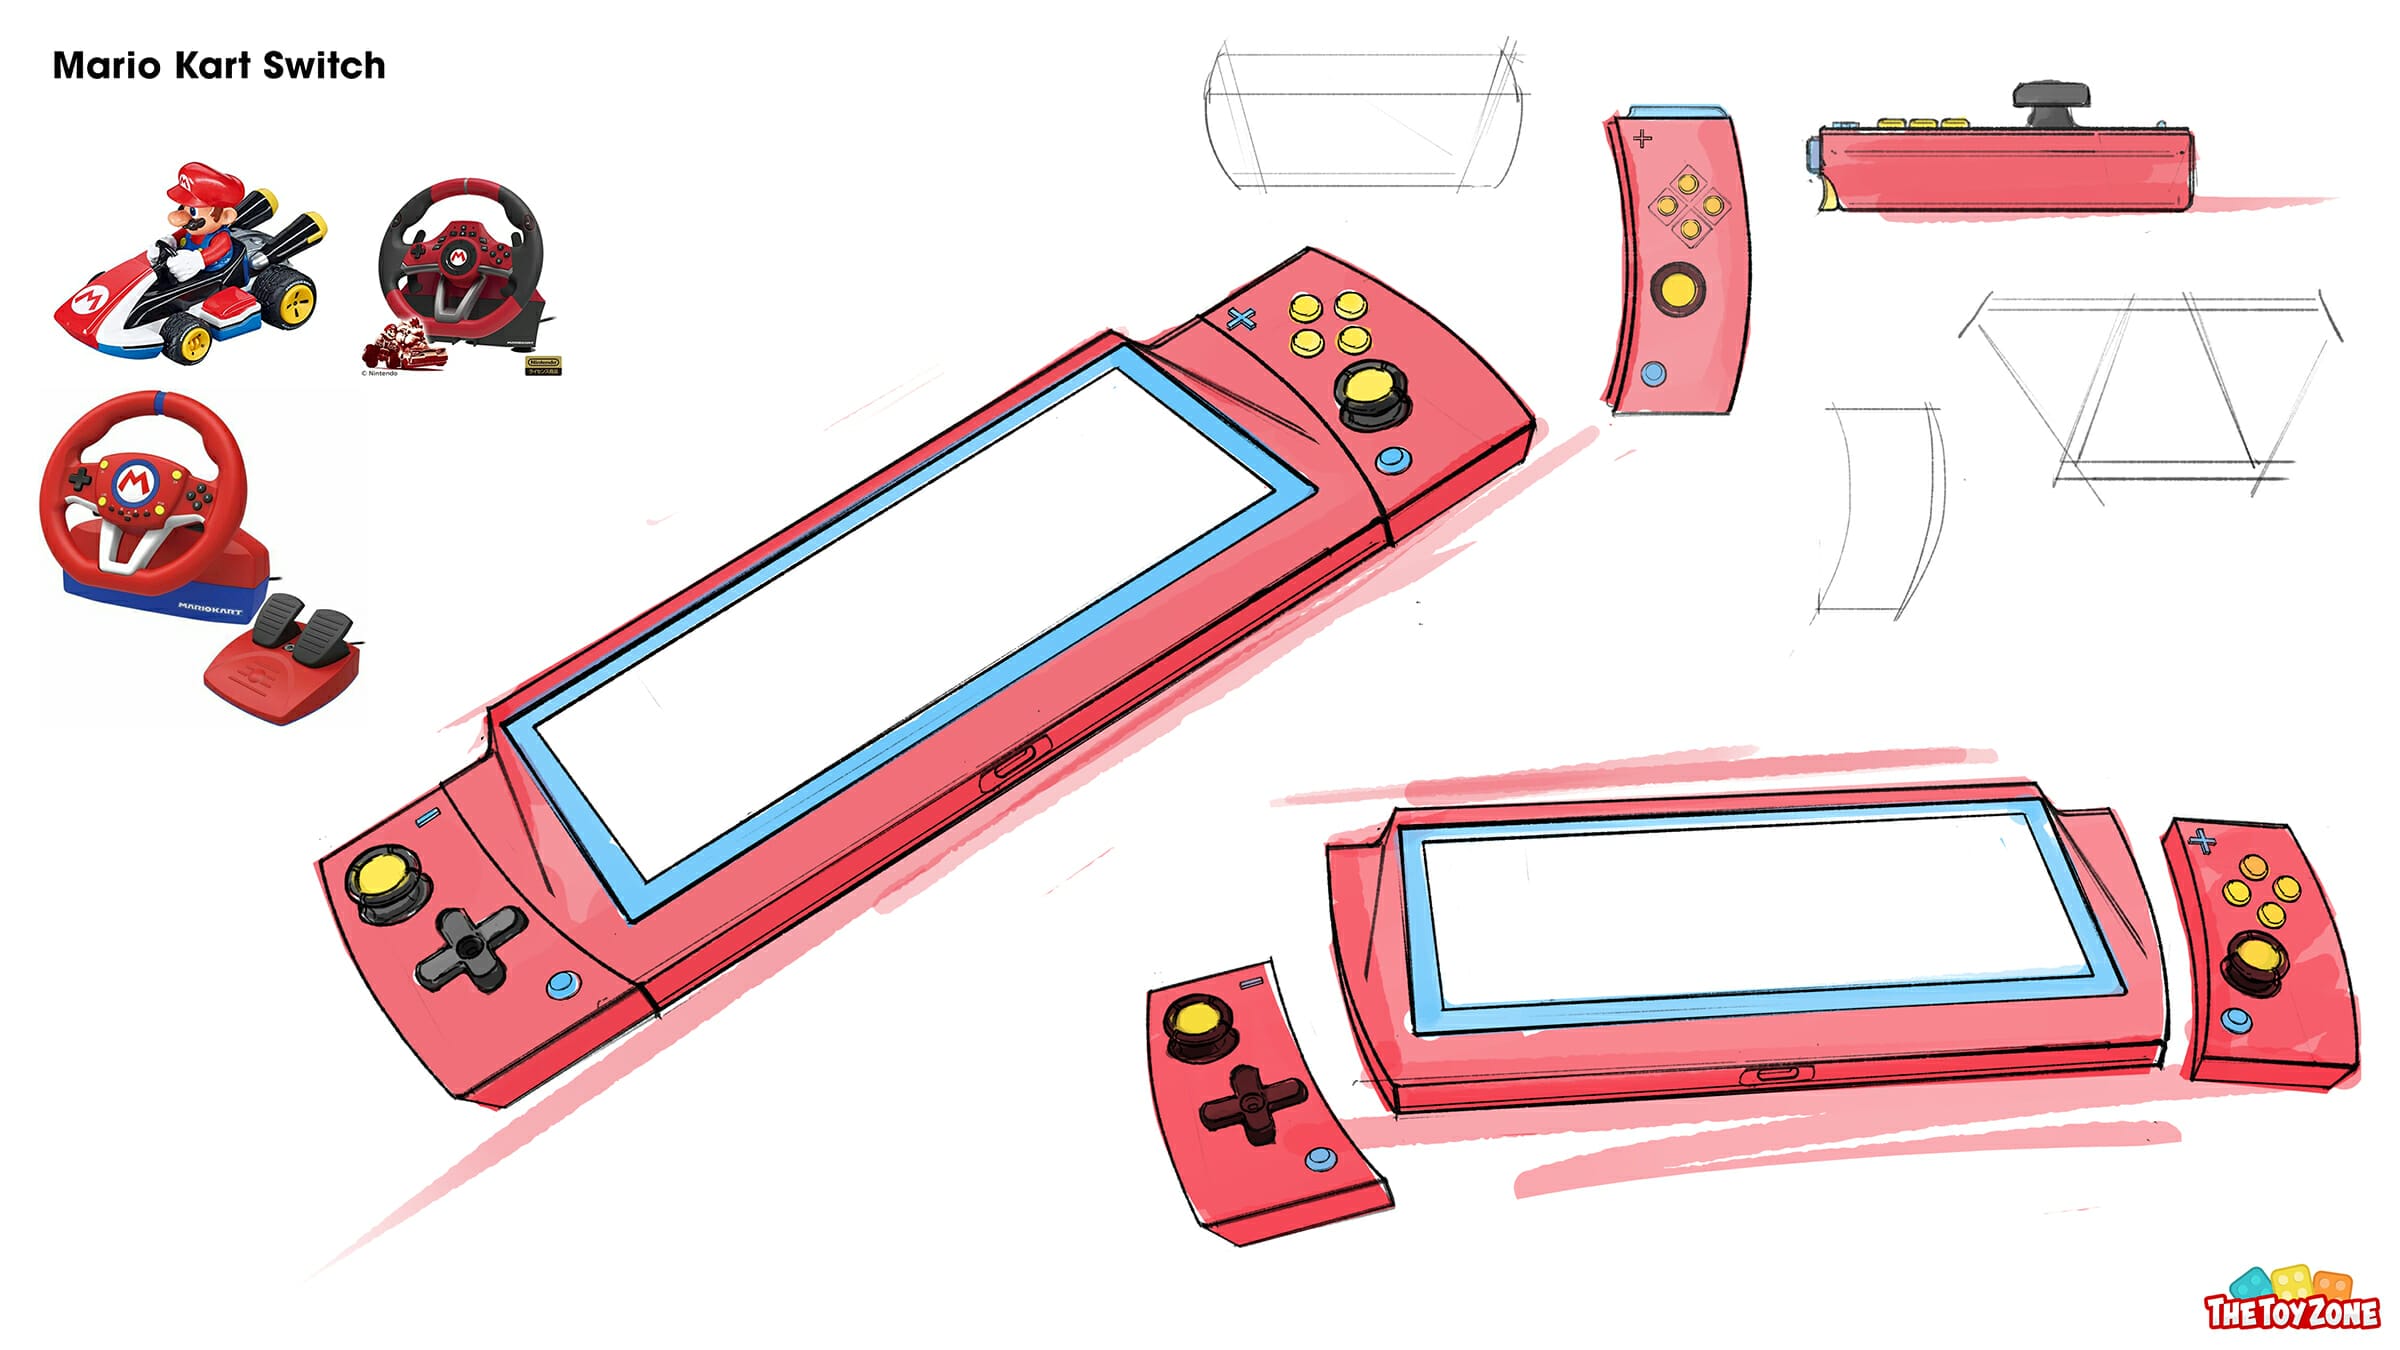 The Mario Kart Switch concept art sketch